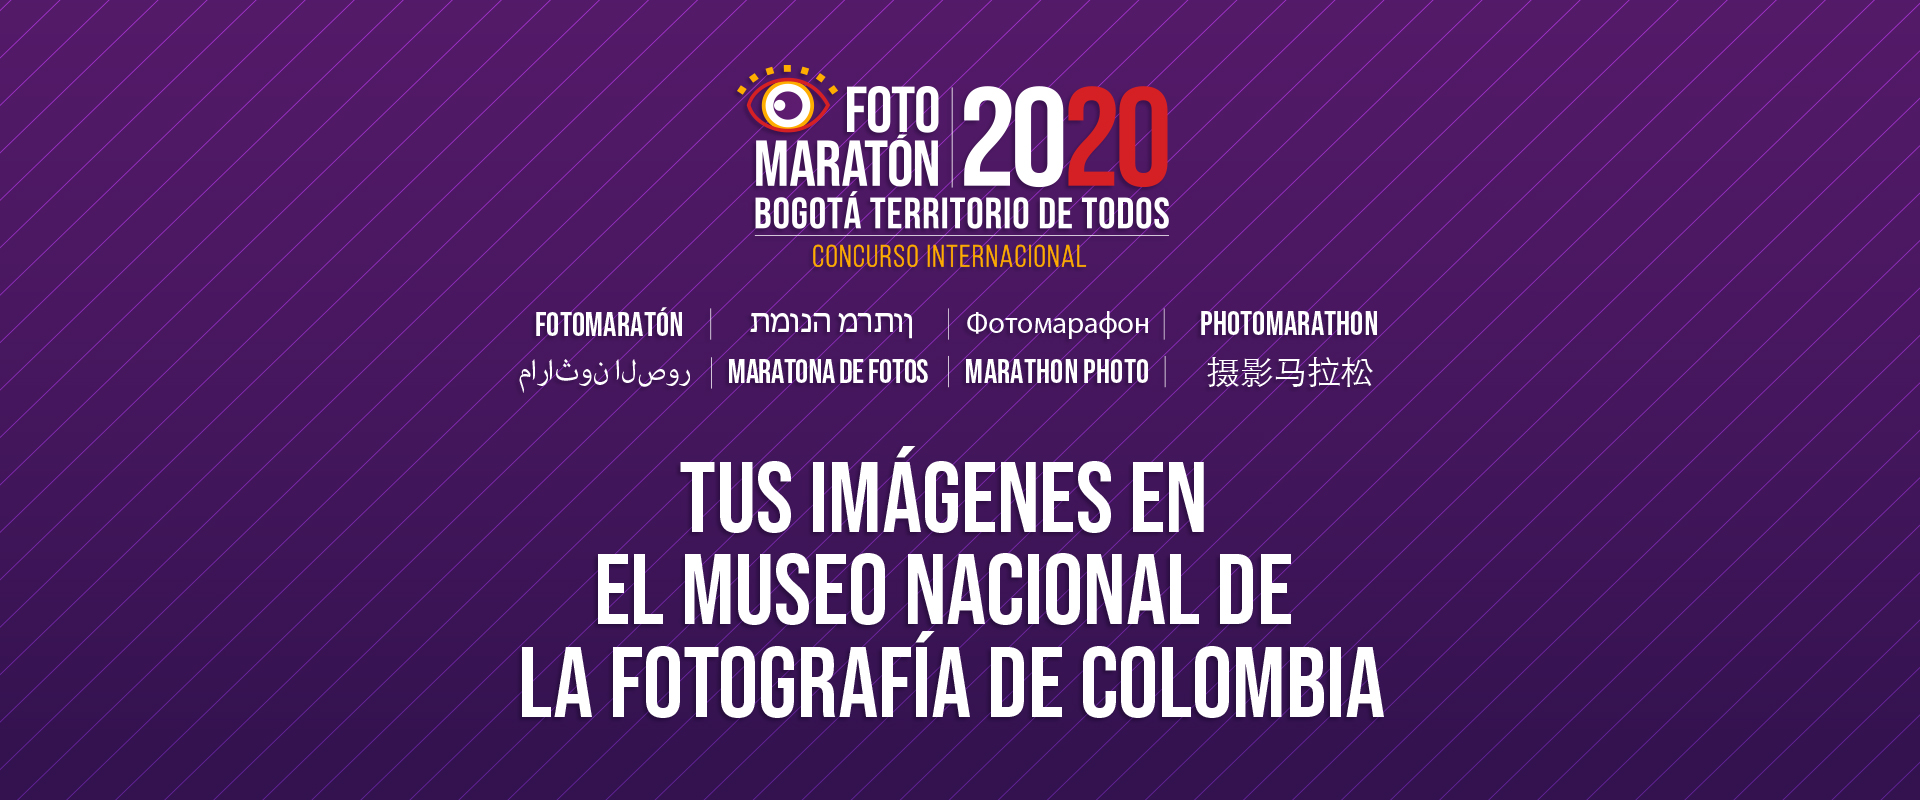 Fotomaraton 2020 Colombia